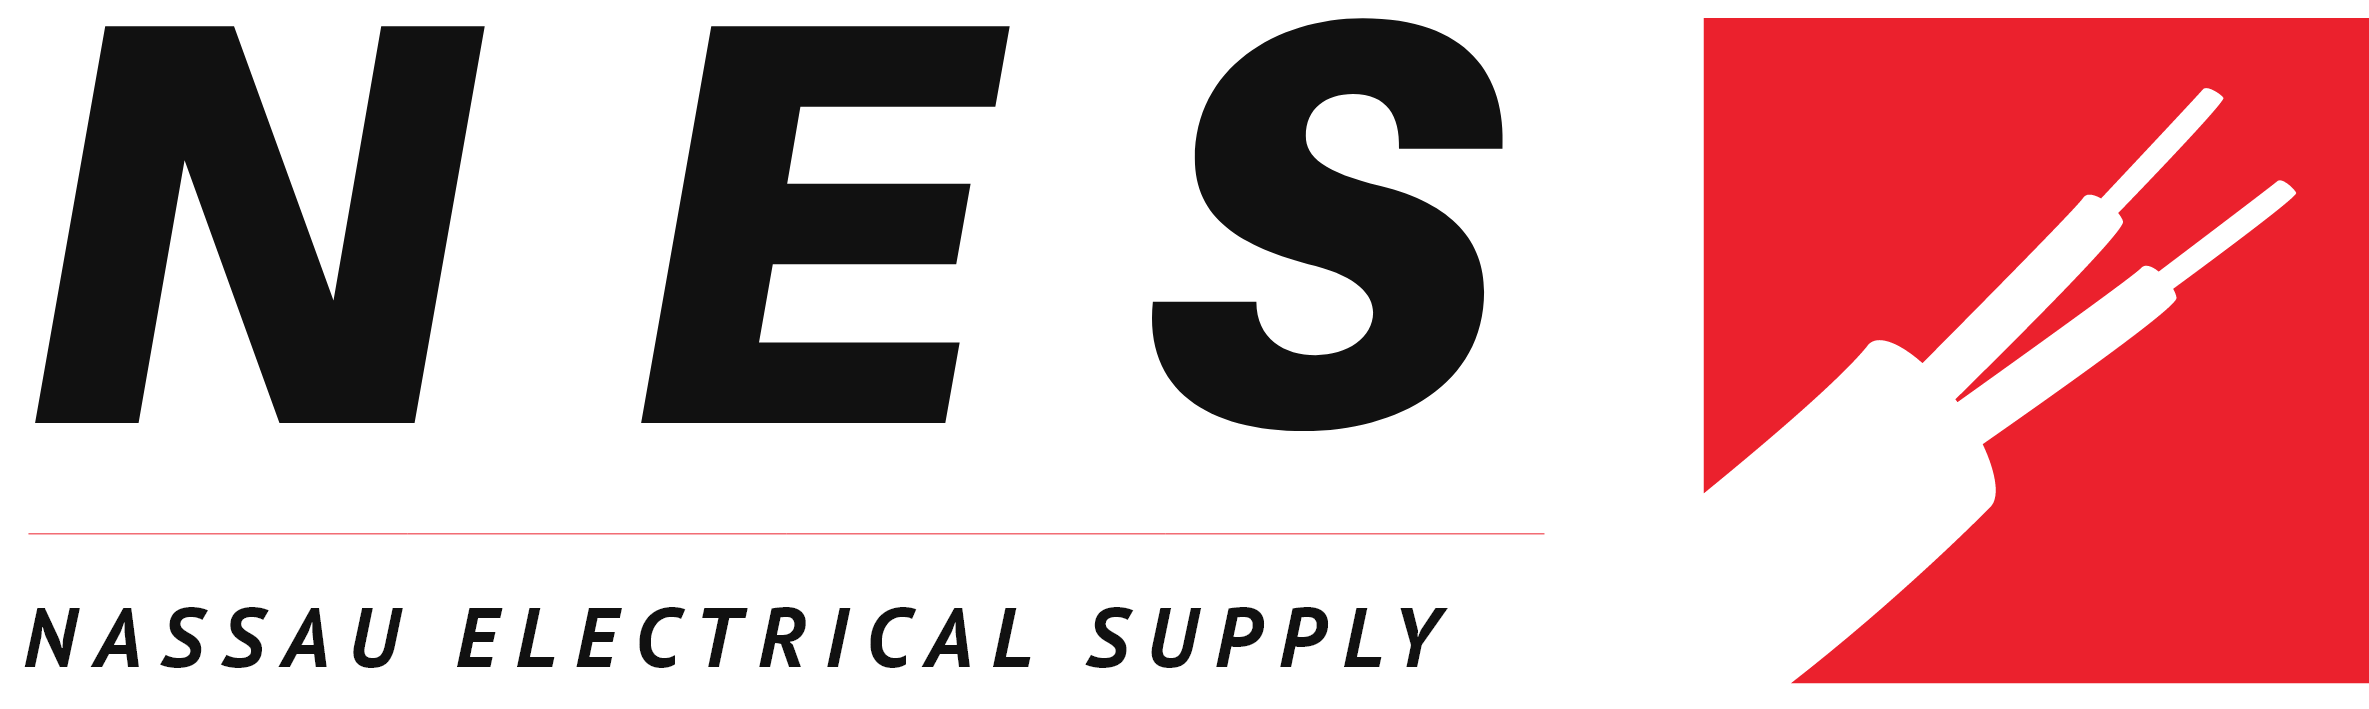 Nassau Electrical Supply